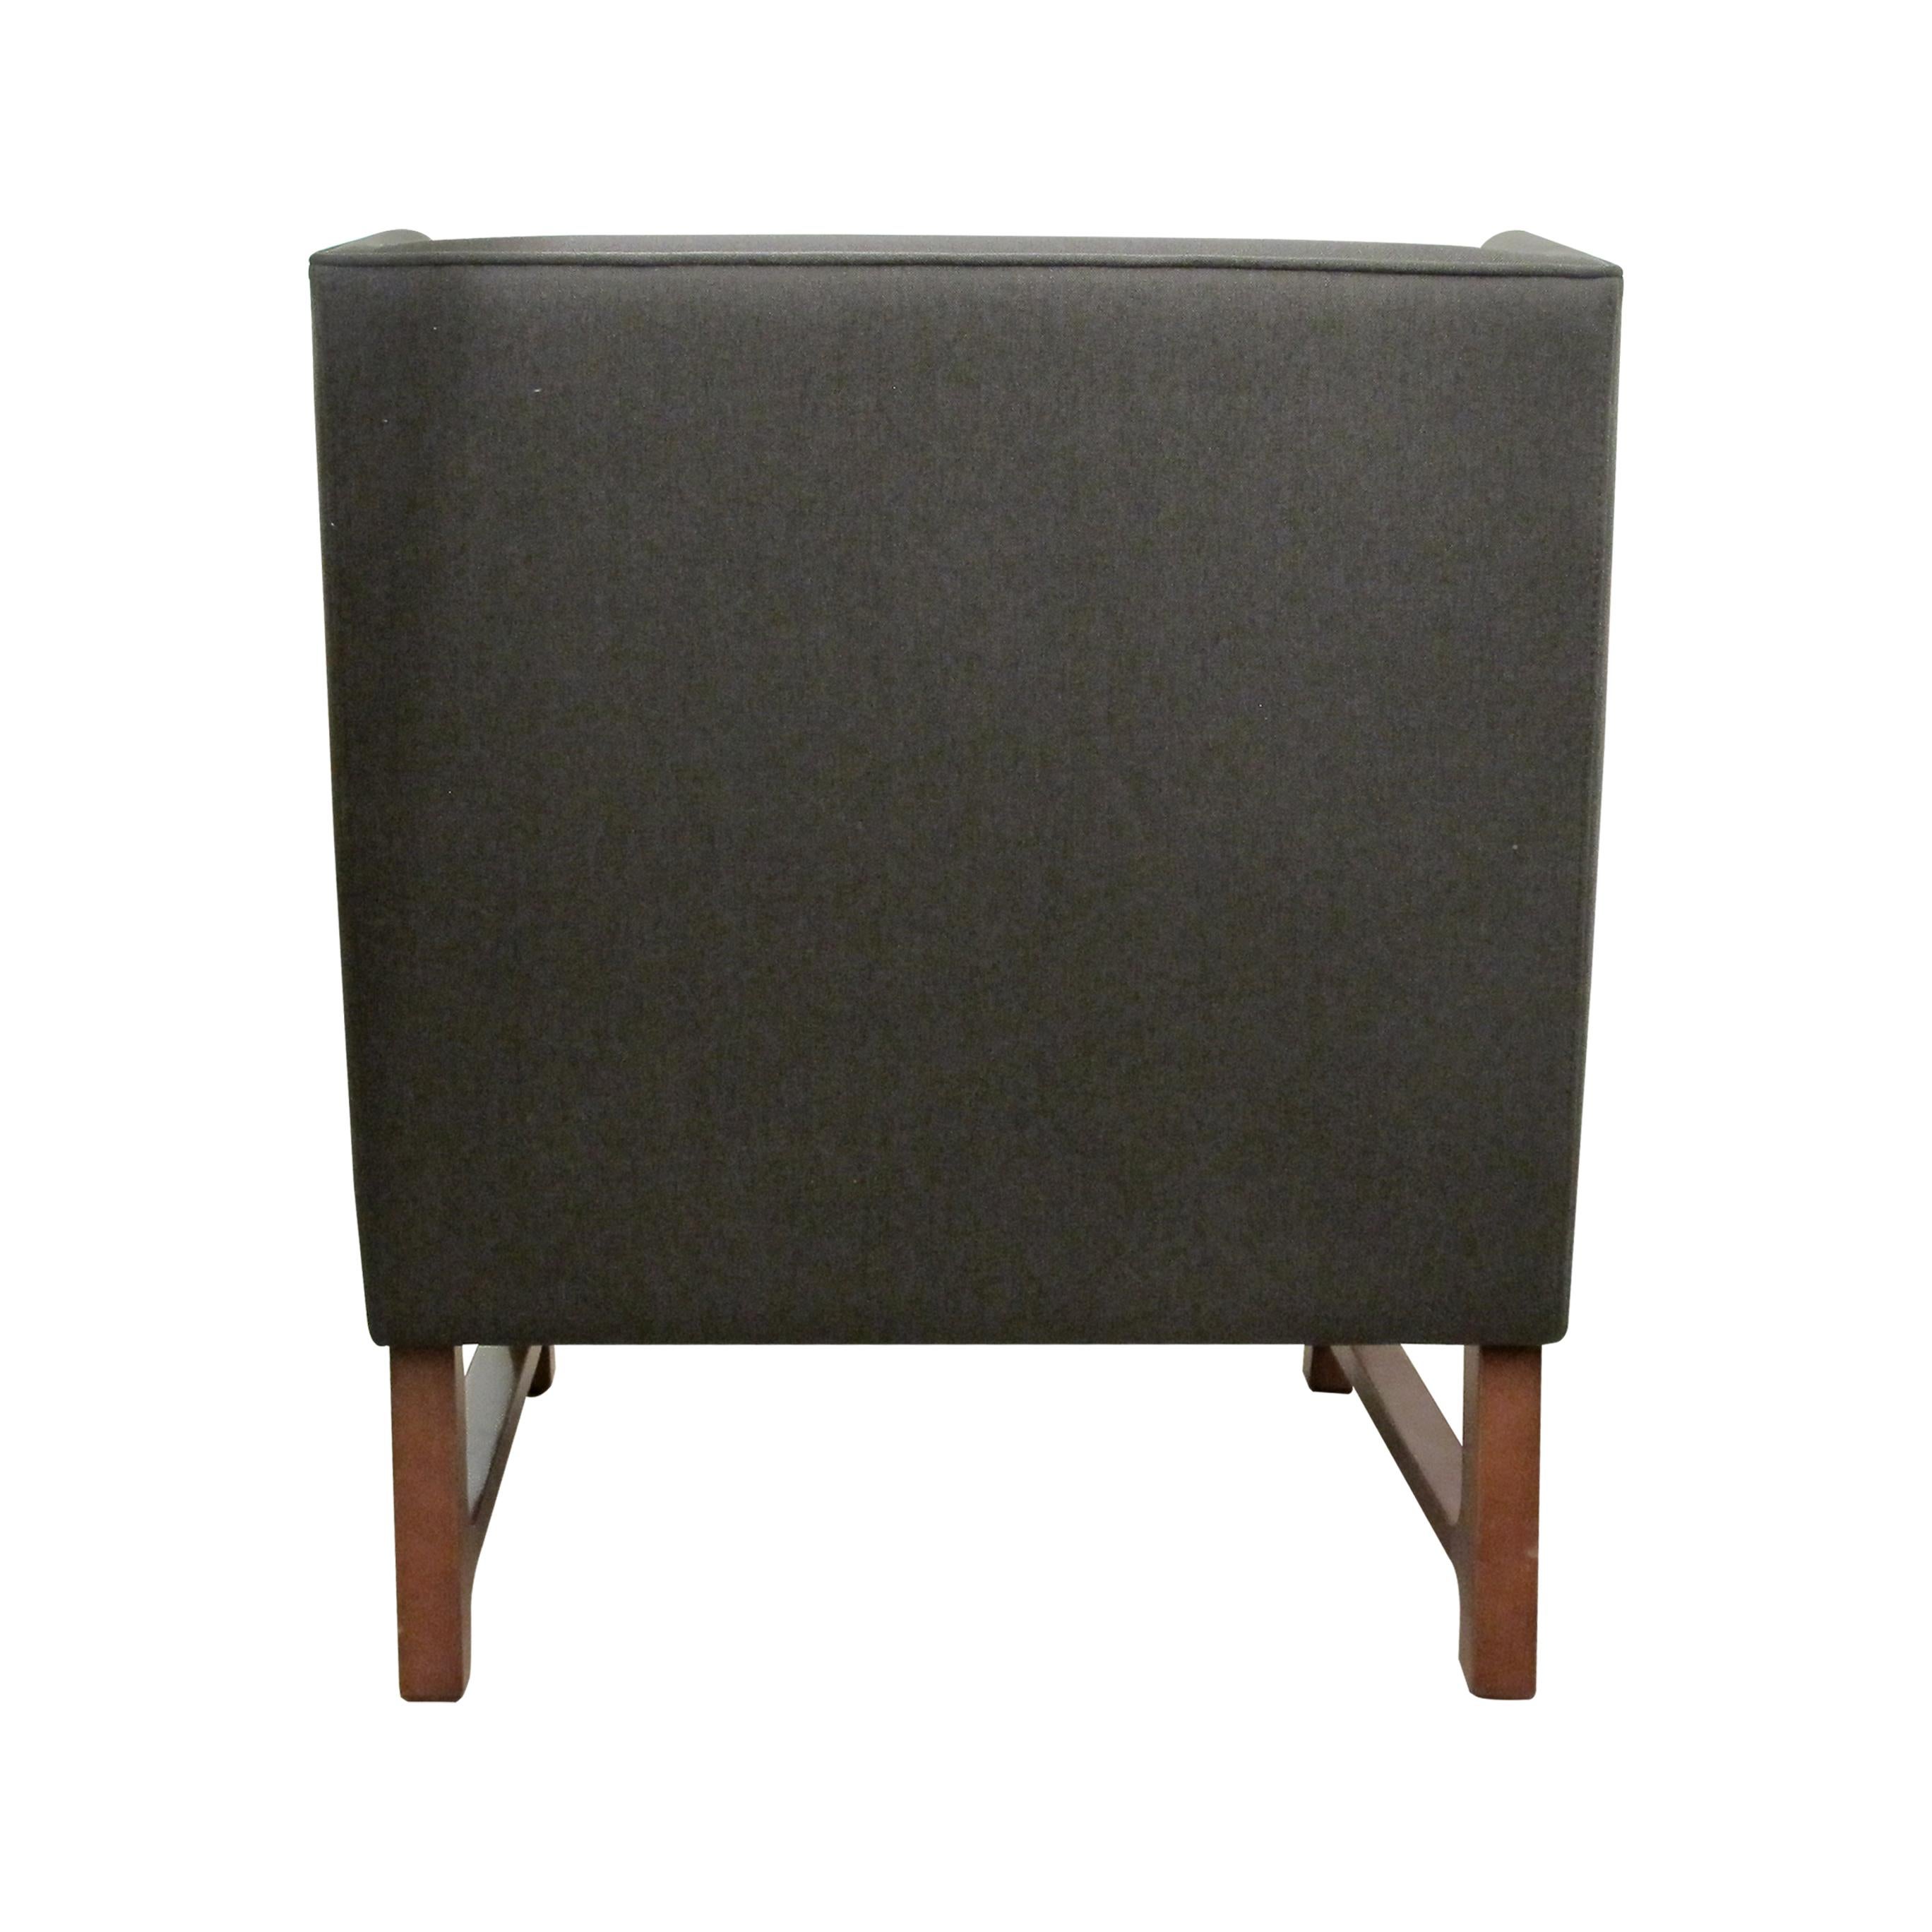 Tissu Grand fauteuil moderne anglais avec son tabouret assorti en vente